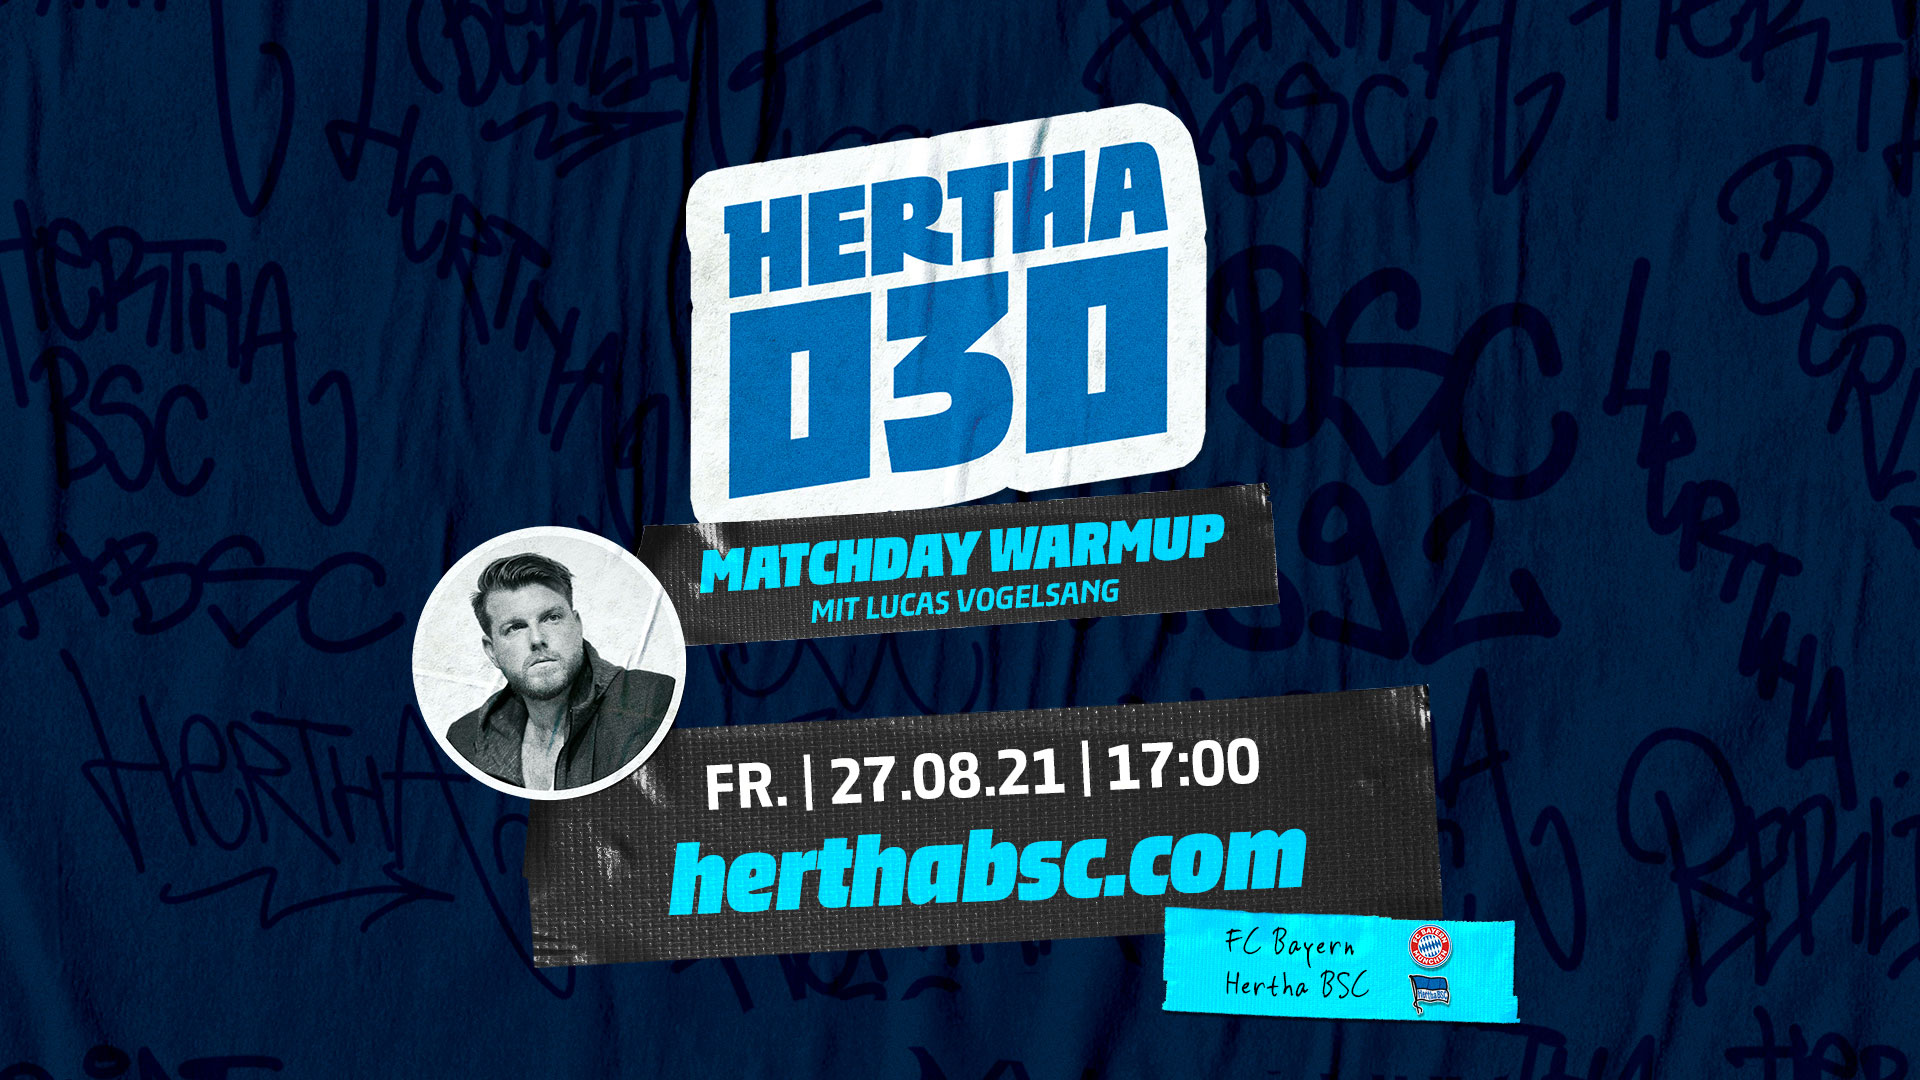 Ankündigung Hertha030 Warmup